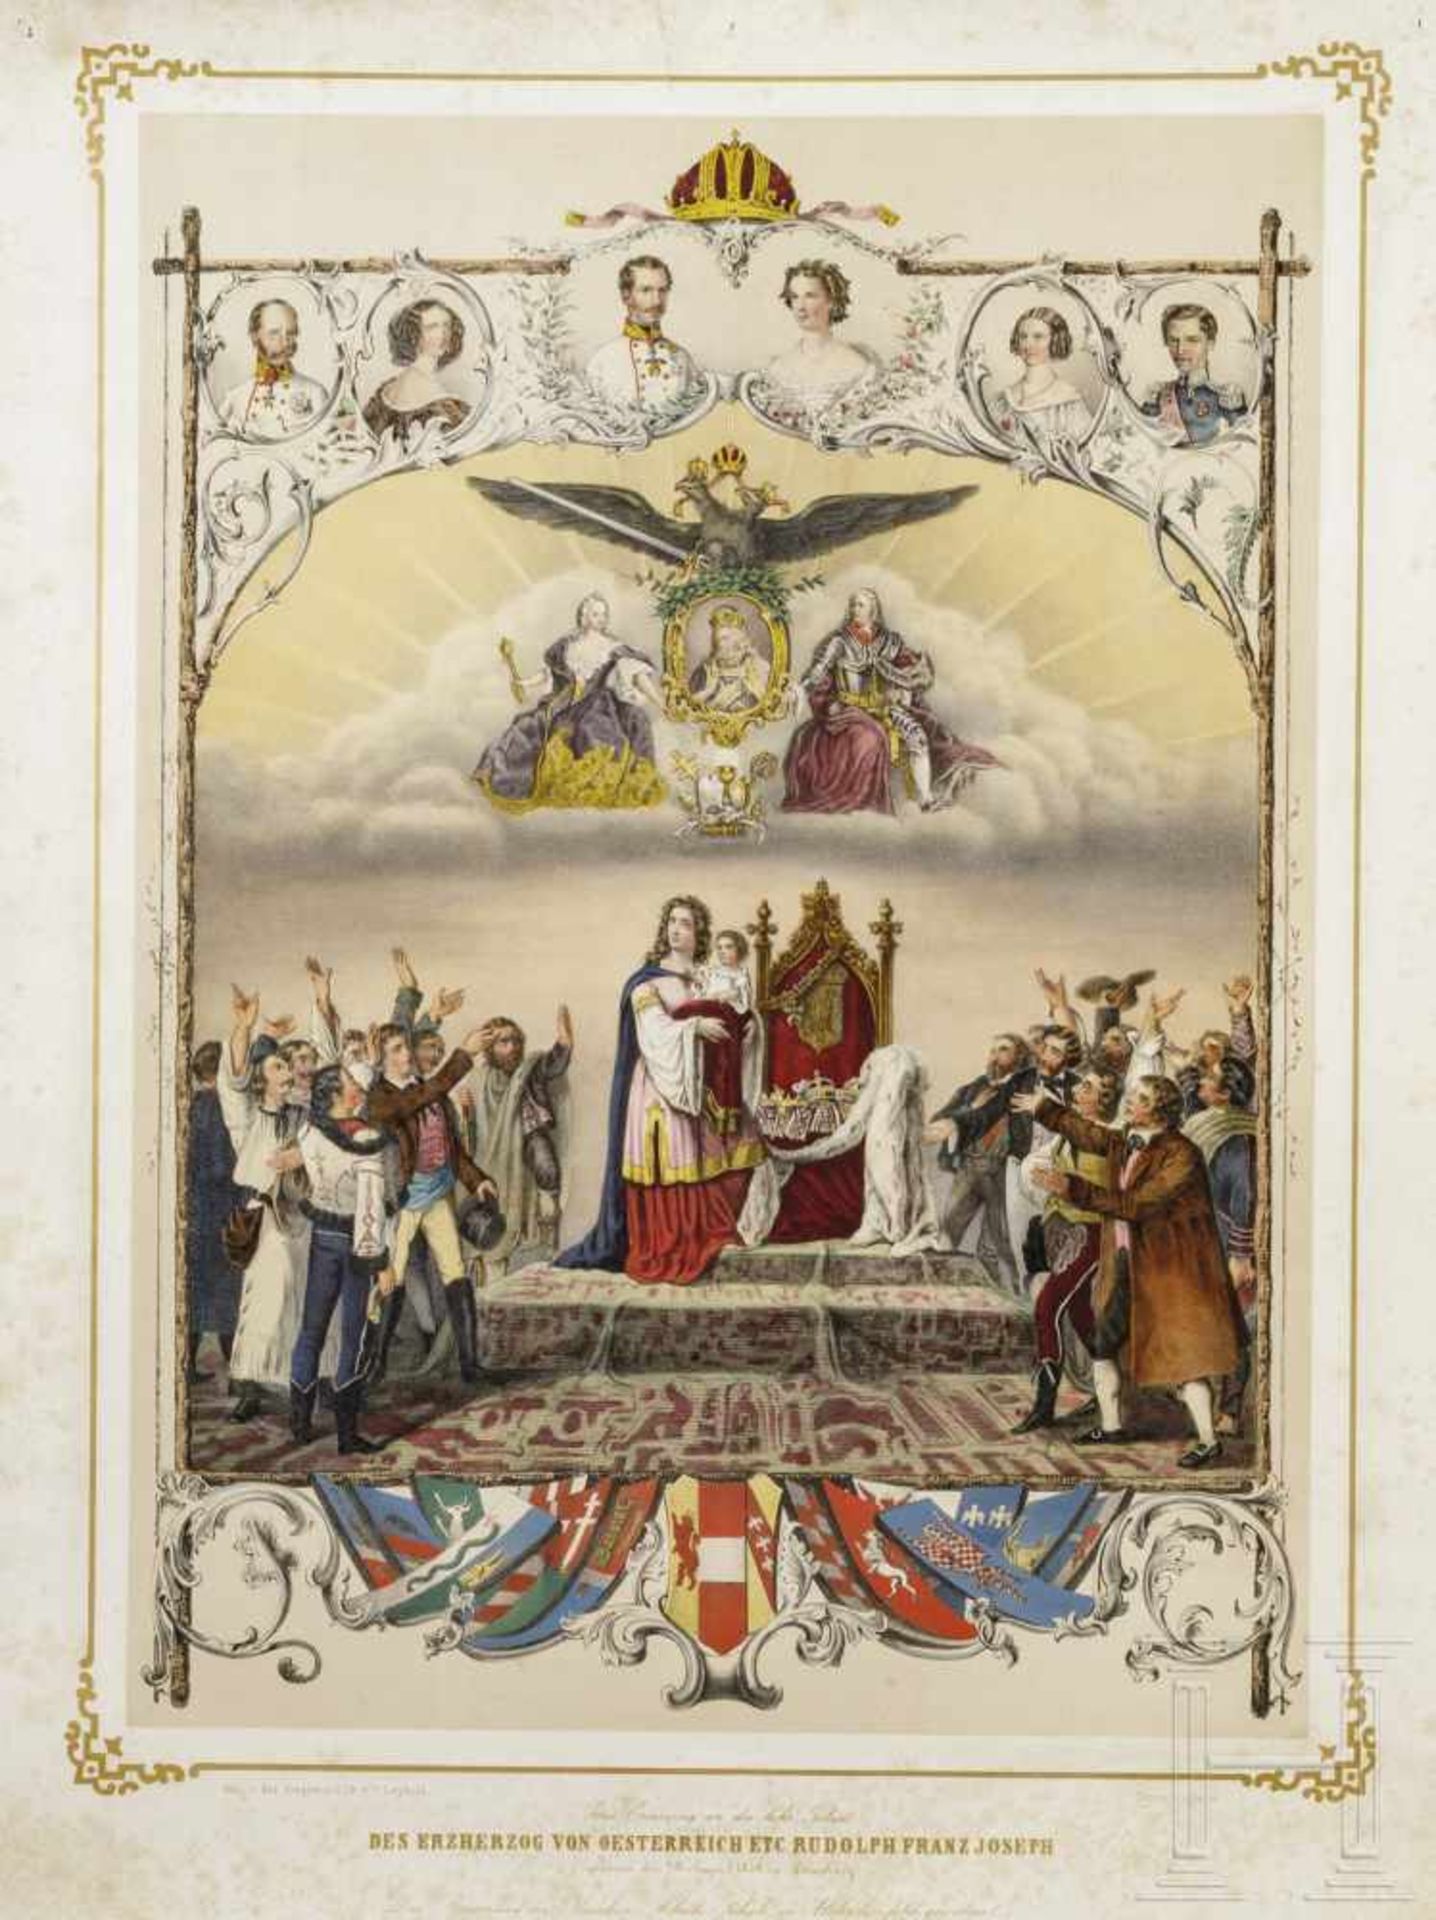 Colored lithograph of the birth of Archduke Rudolf Franz Joseph, Eduard Friedrich Leybold, dated